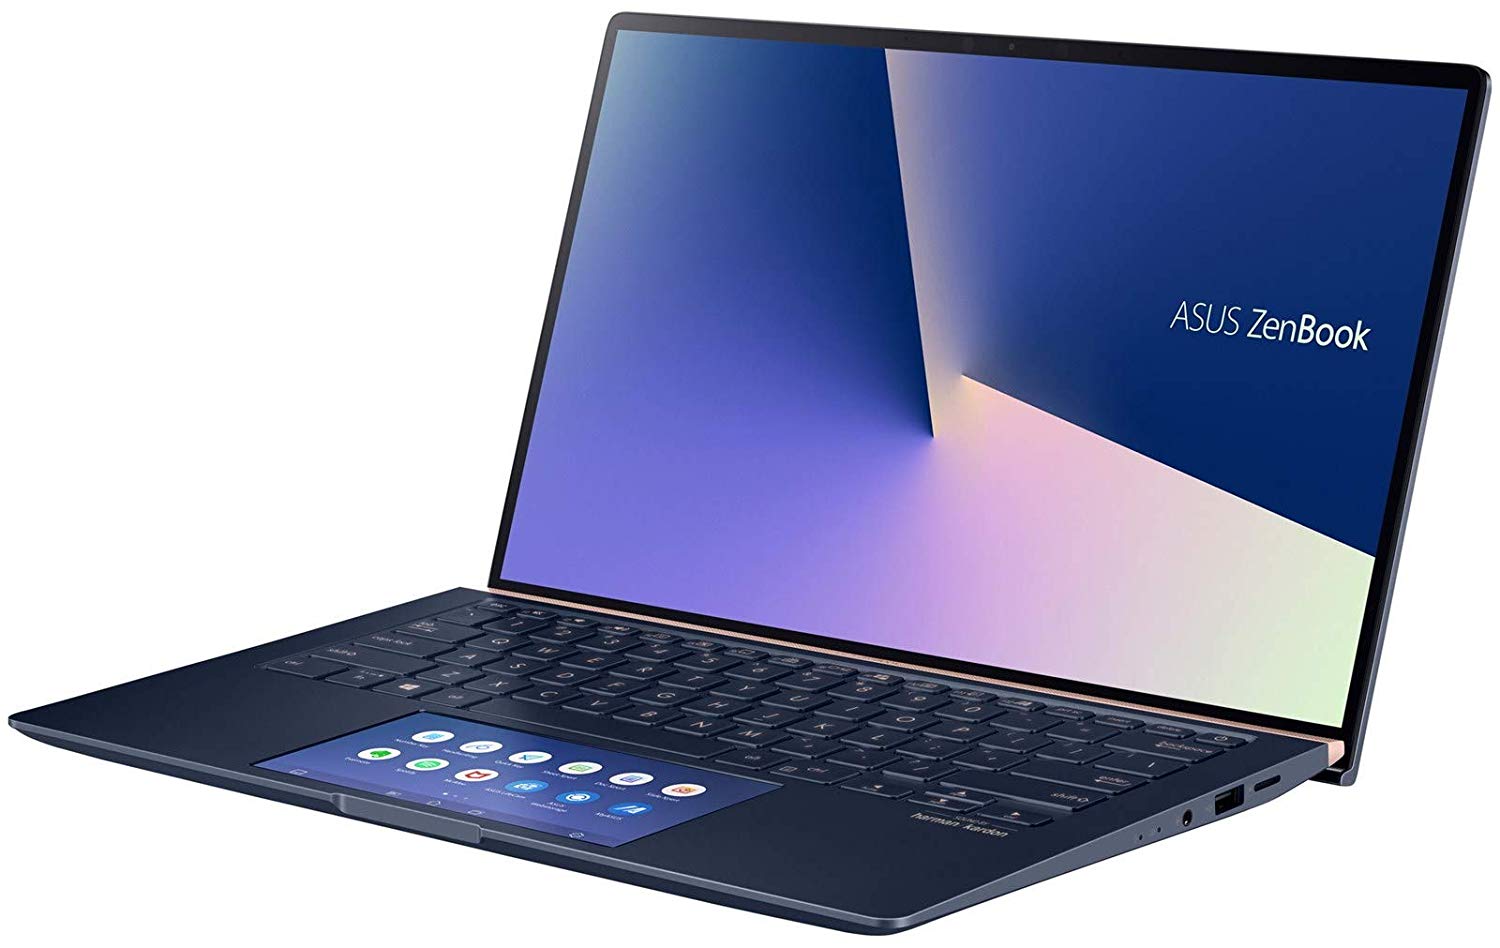 ASUS Zenbook 14 UX434 Home and Business Laptop (Intel i7-10510U 4-Core, 16GB RAM, 2TB m.2 SATA SSD, 14.0" Full HD (1920x1080), NVIDIA MX250, Wifi, Bluetooth, Webcam, 1xHDMI, Win 10 Pro) (Used) - image 2 of 6